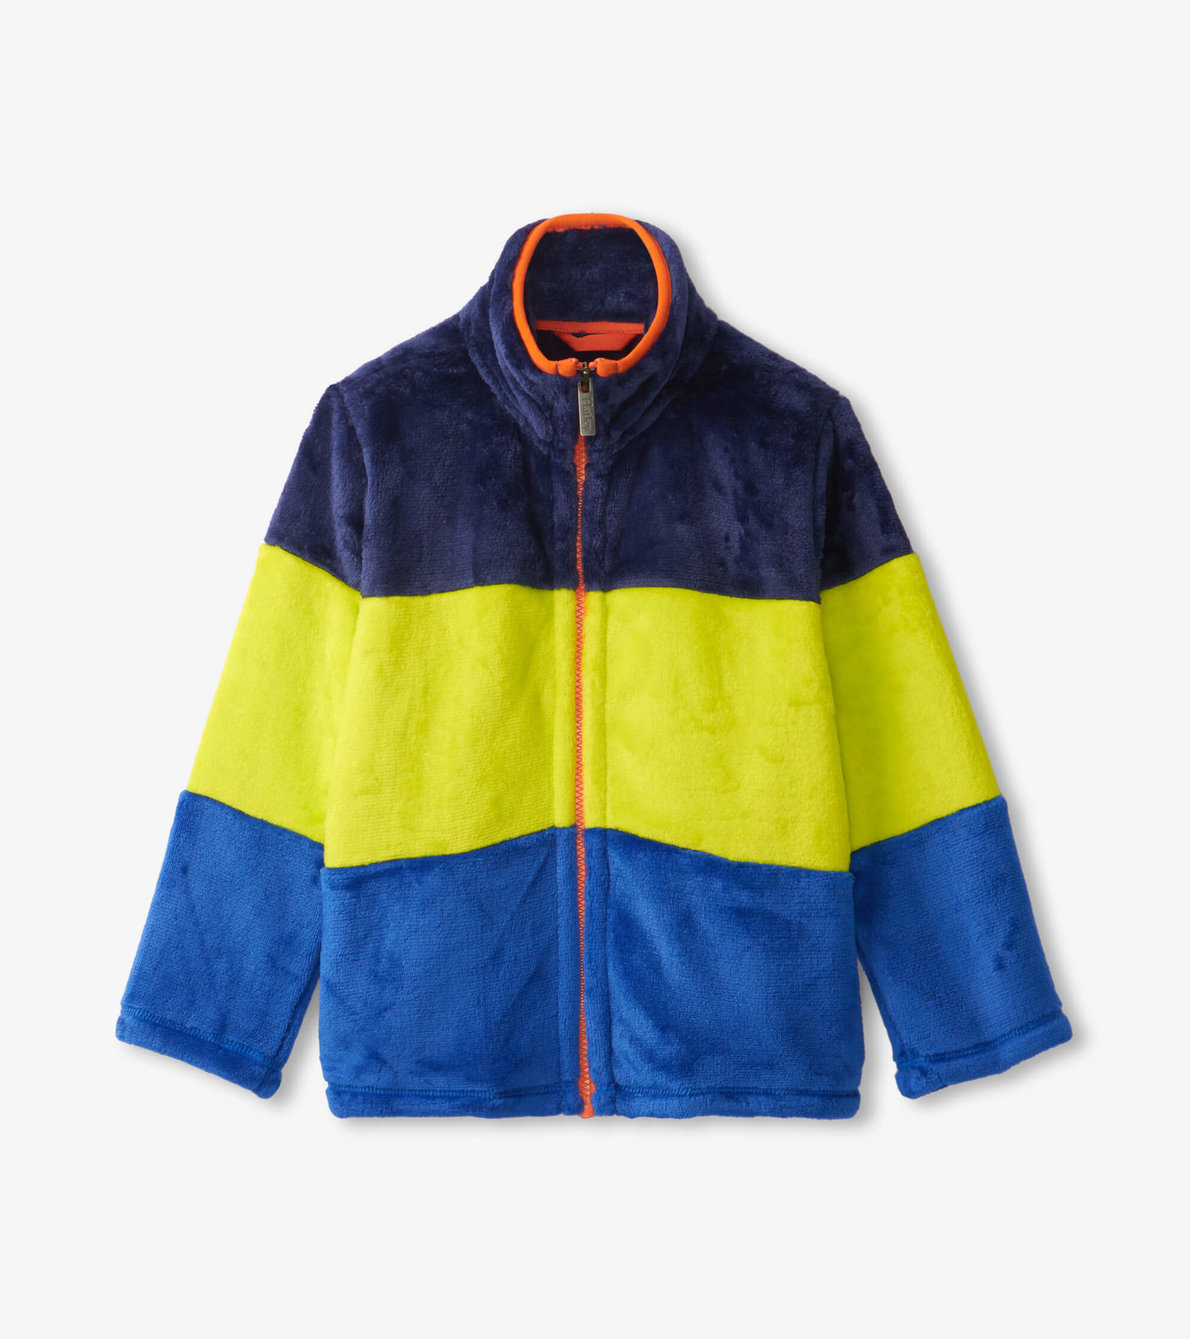 View larger image of Kids Blue & Green Fleece Jacket